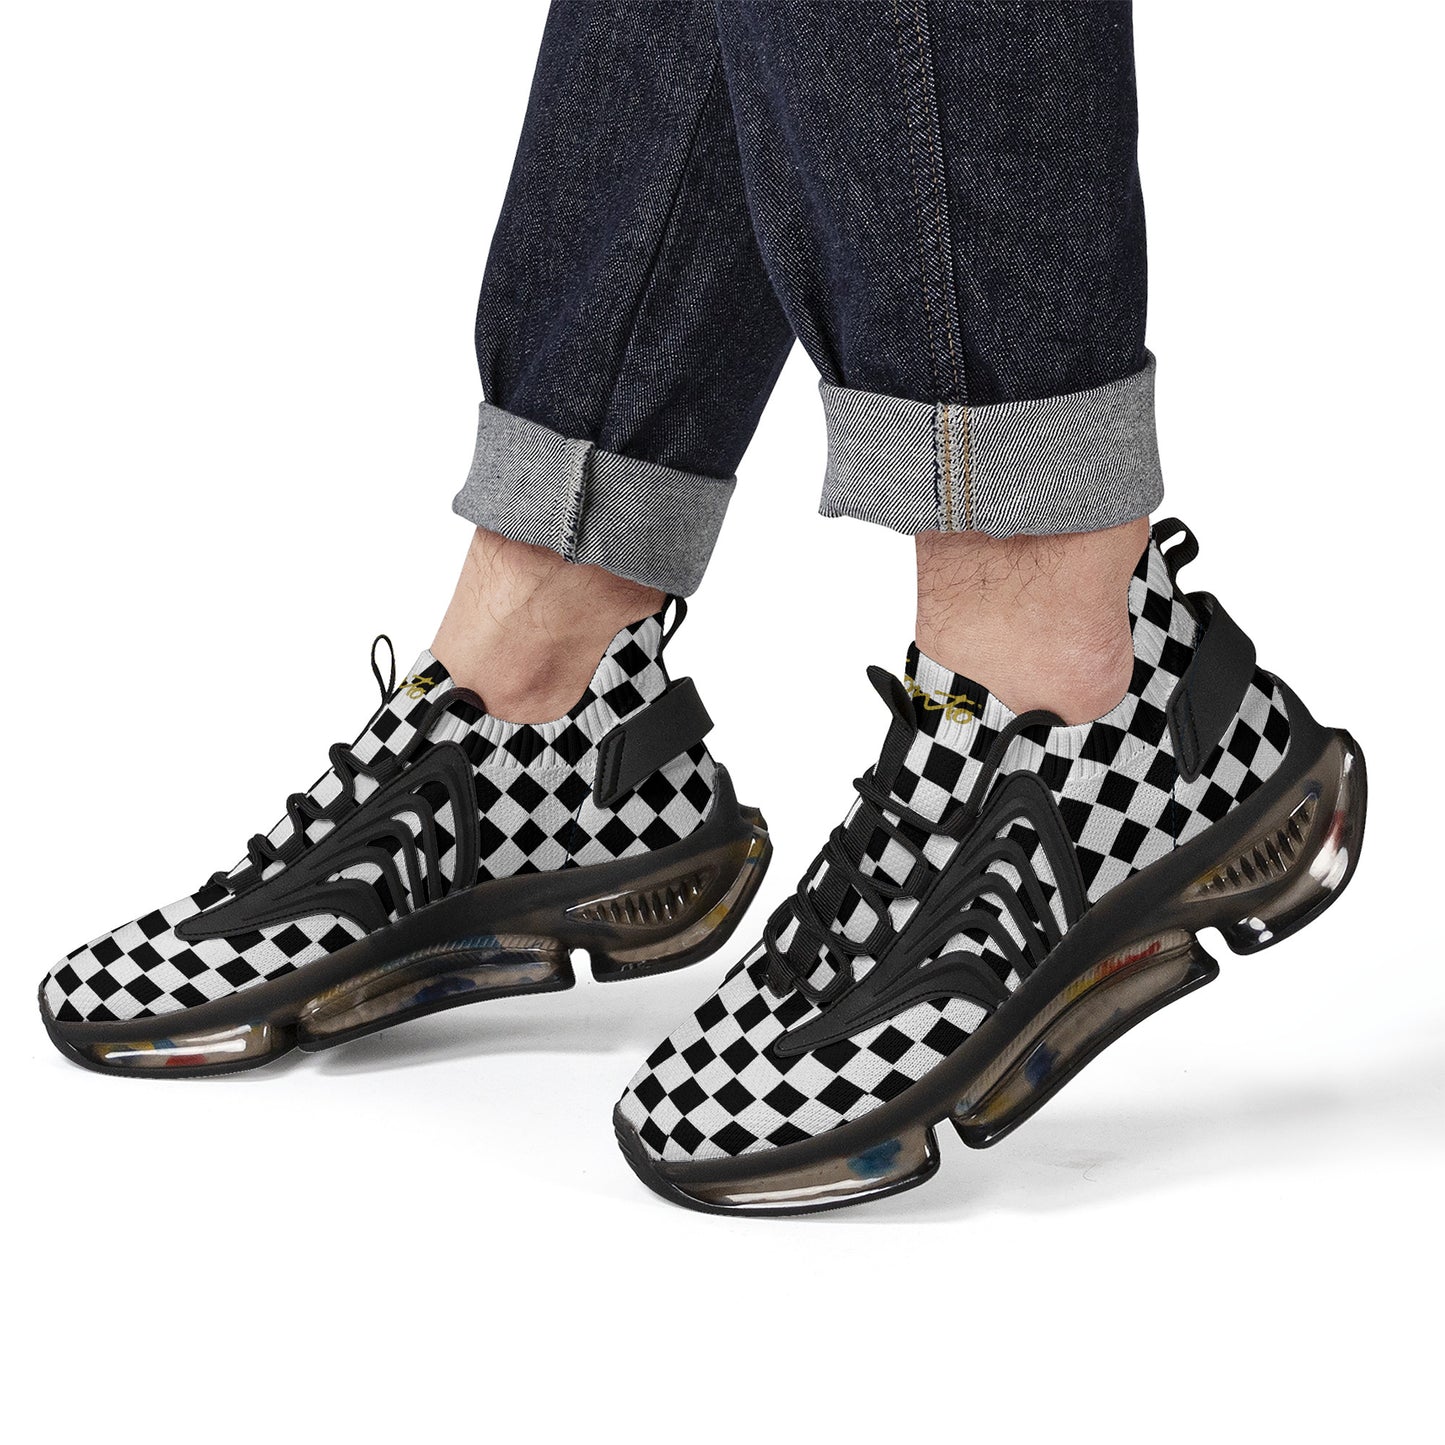 SF_S36 Air Max React Sneakers - Black